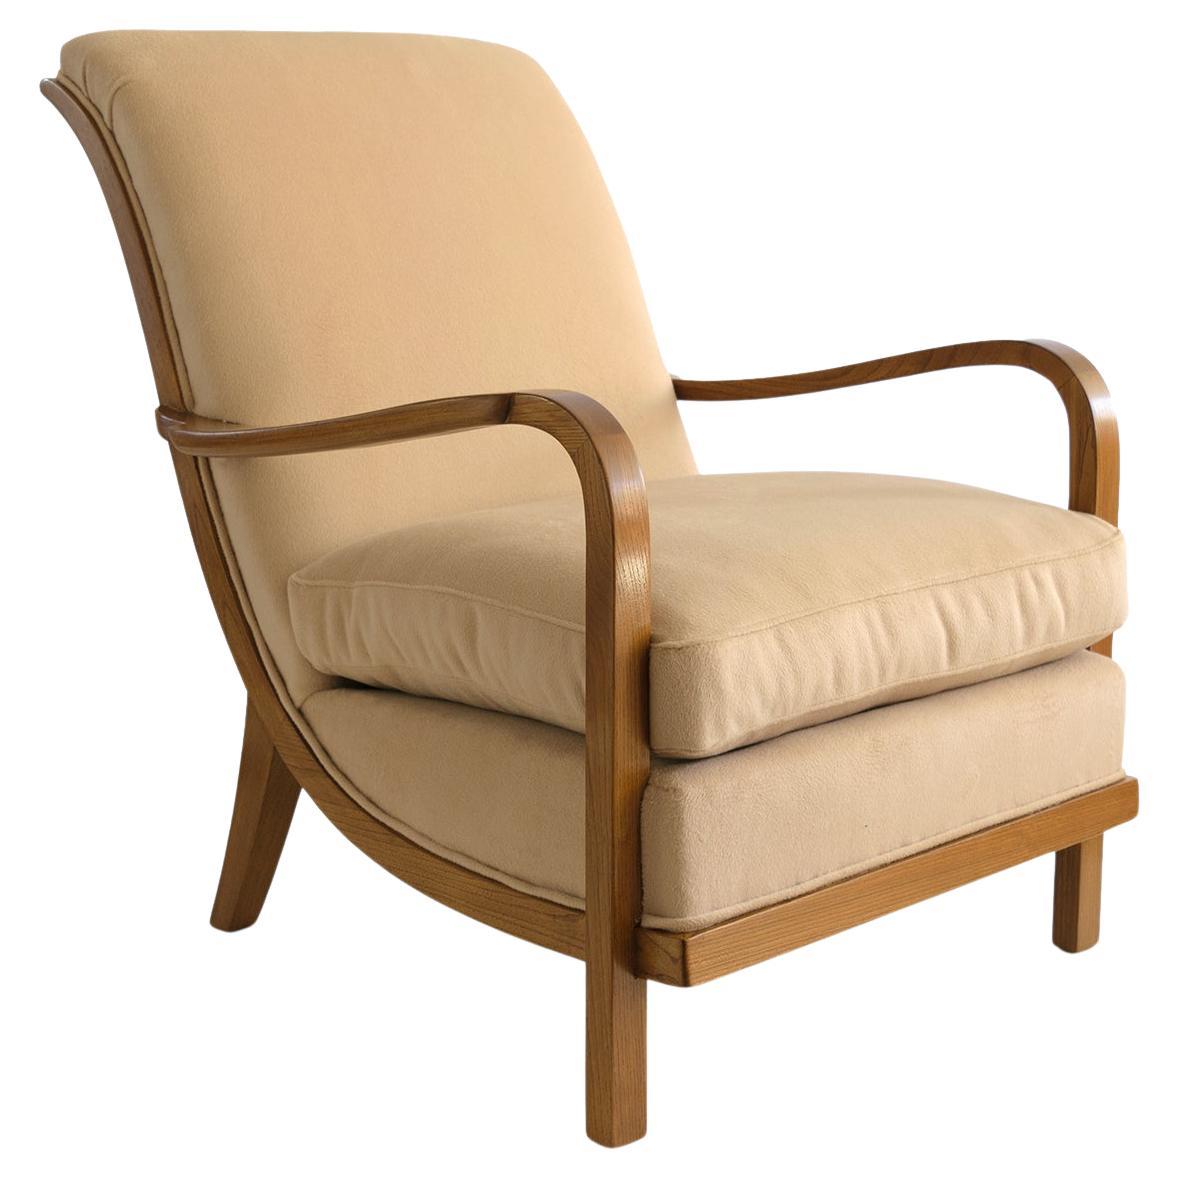 Swedish Art Deco lounge chair by Wilhelm Knoll, Malmo 1933